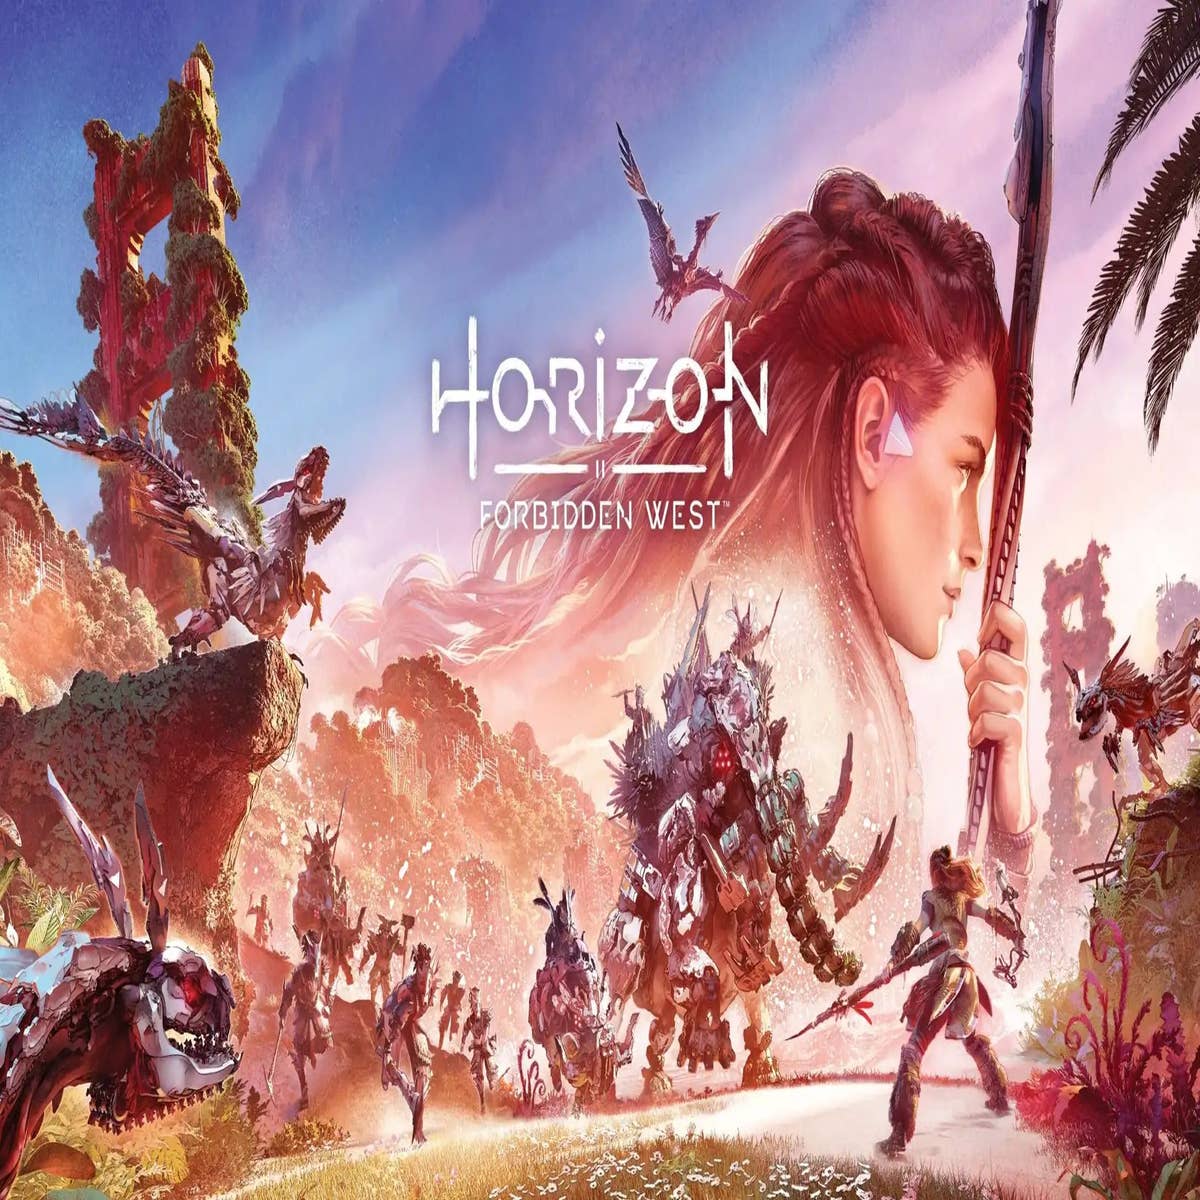 Horizon Zero Dawn Complete Edition - PC Features Trailer 